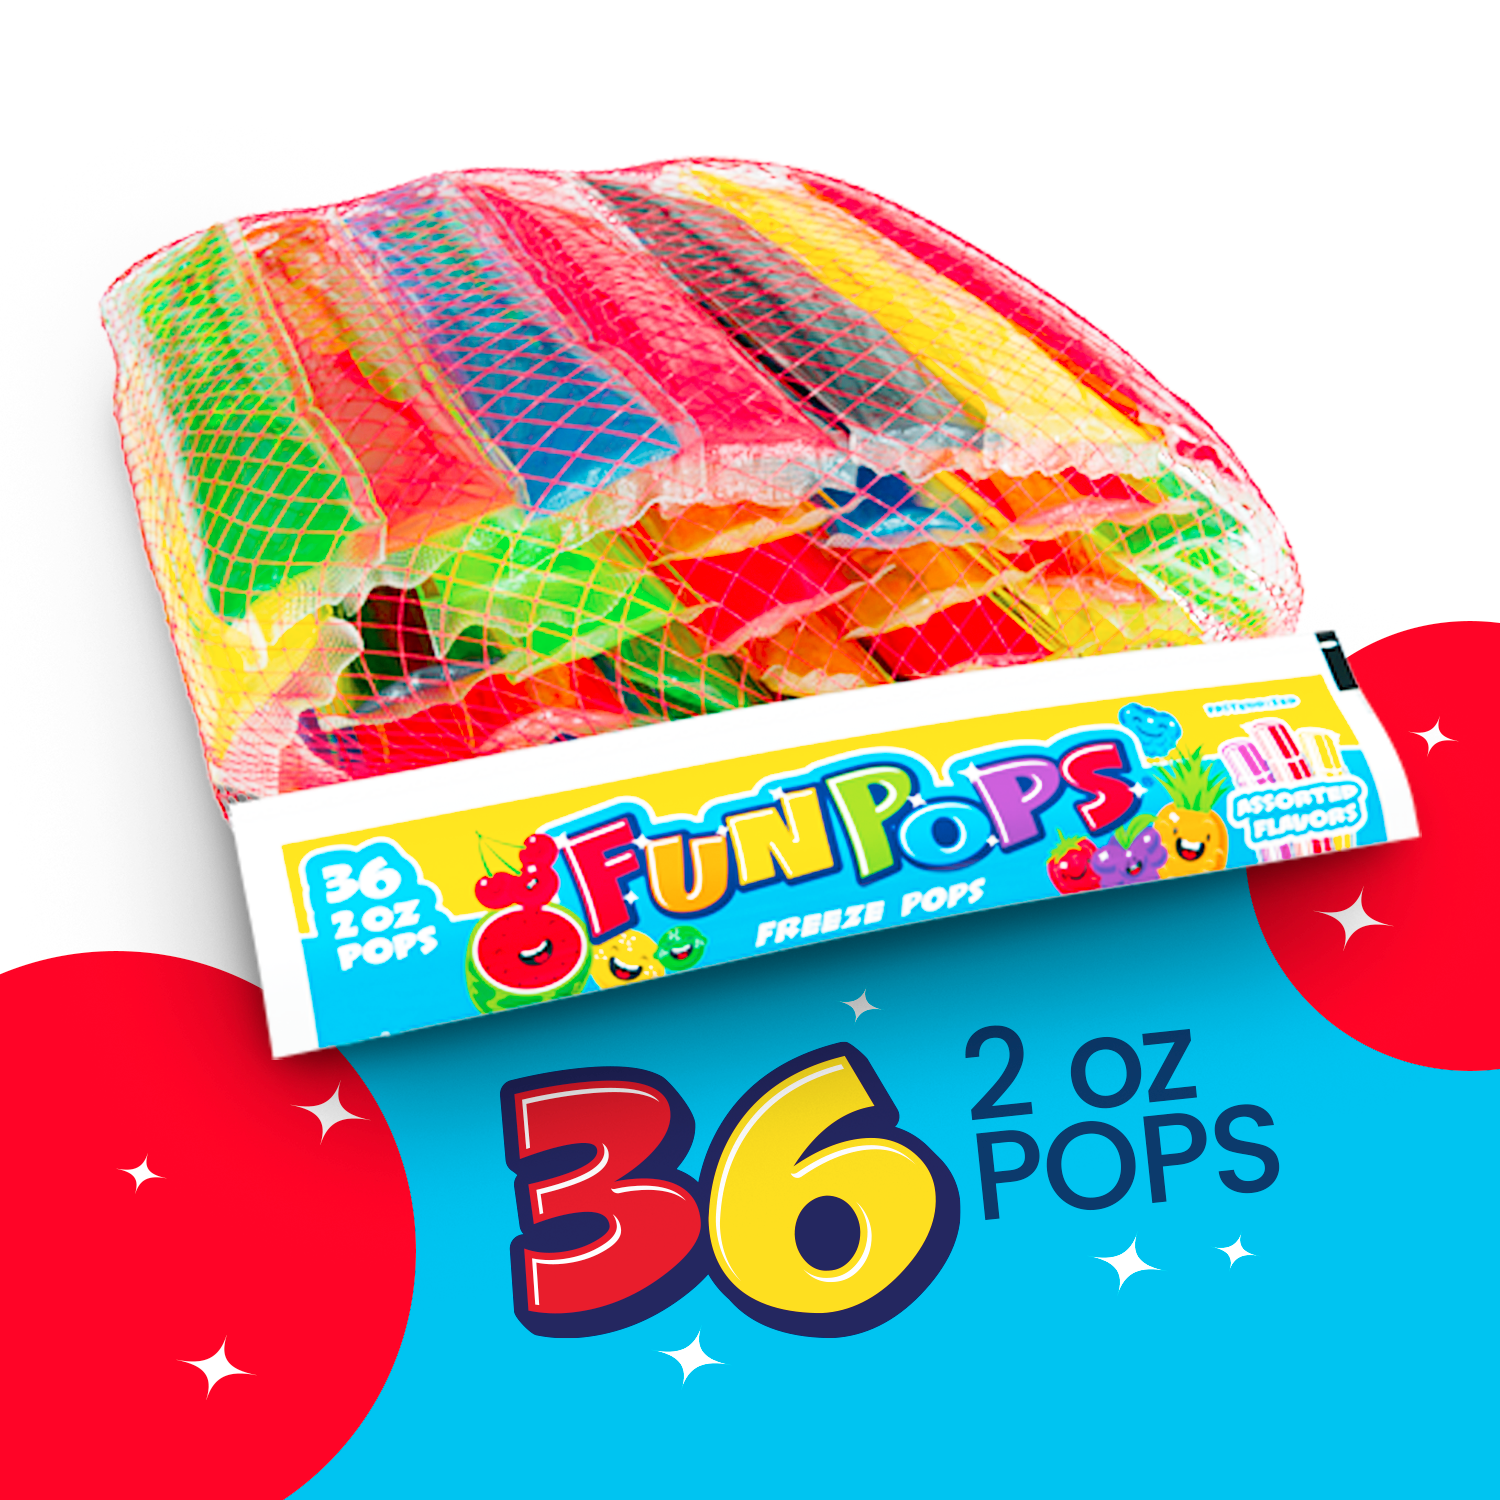 FunPops Freezer Ice Pops, 2 oz, 36 Count Bag, Variety Pack - image 3 of 11